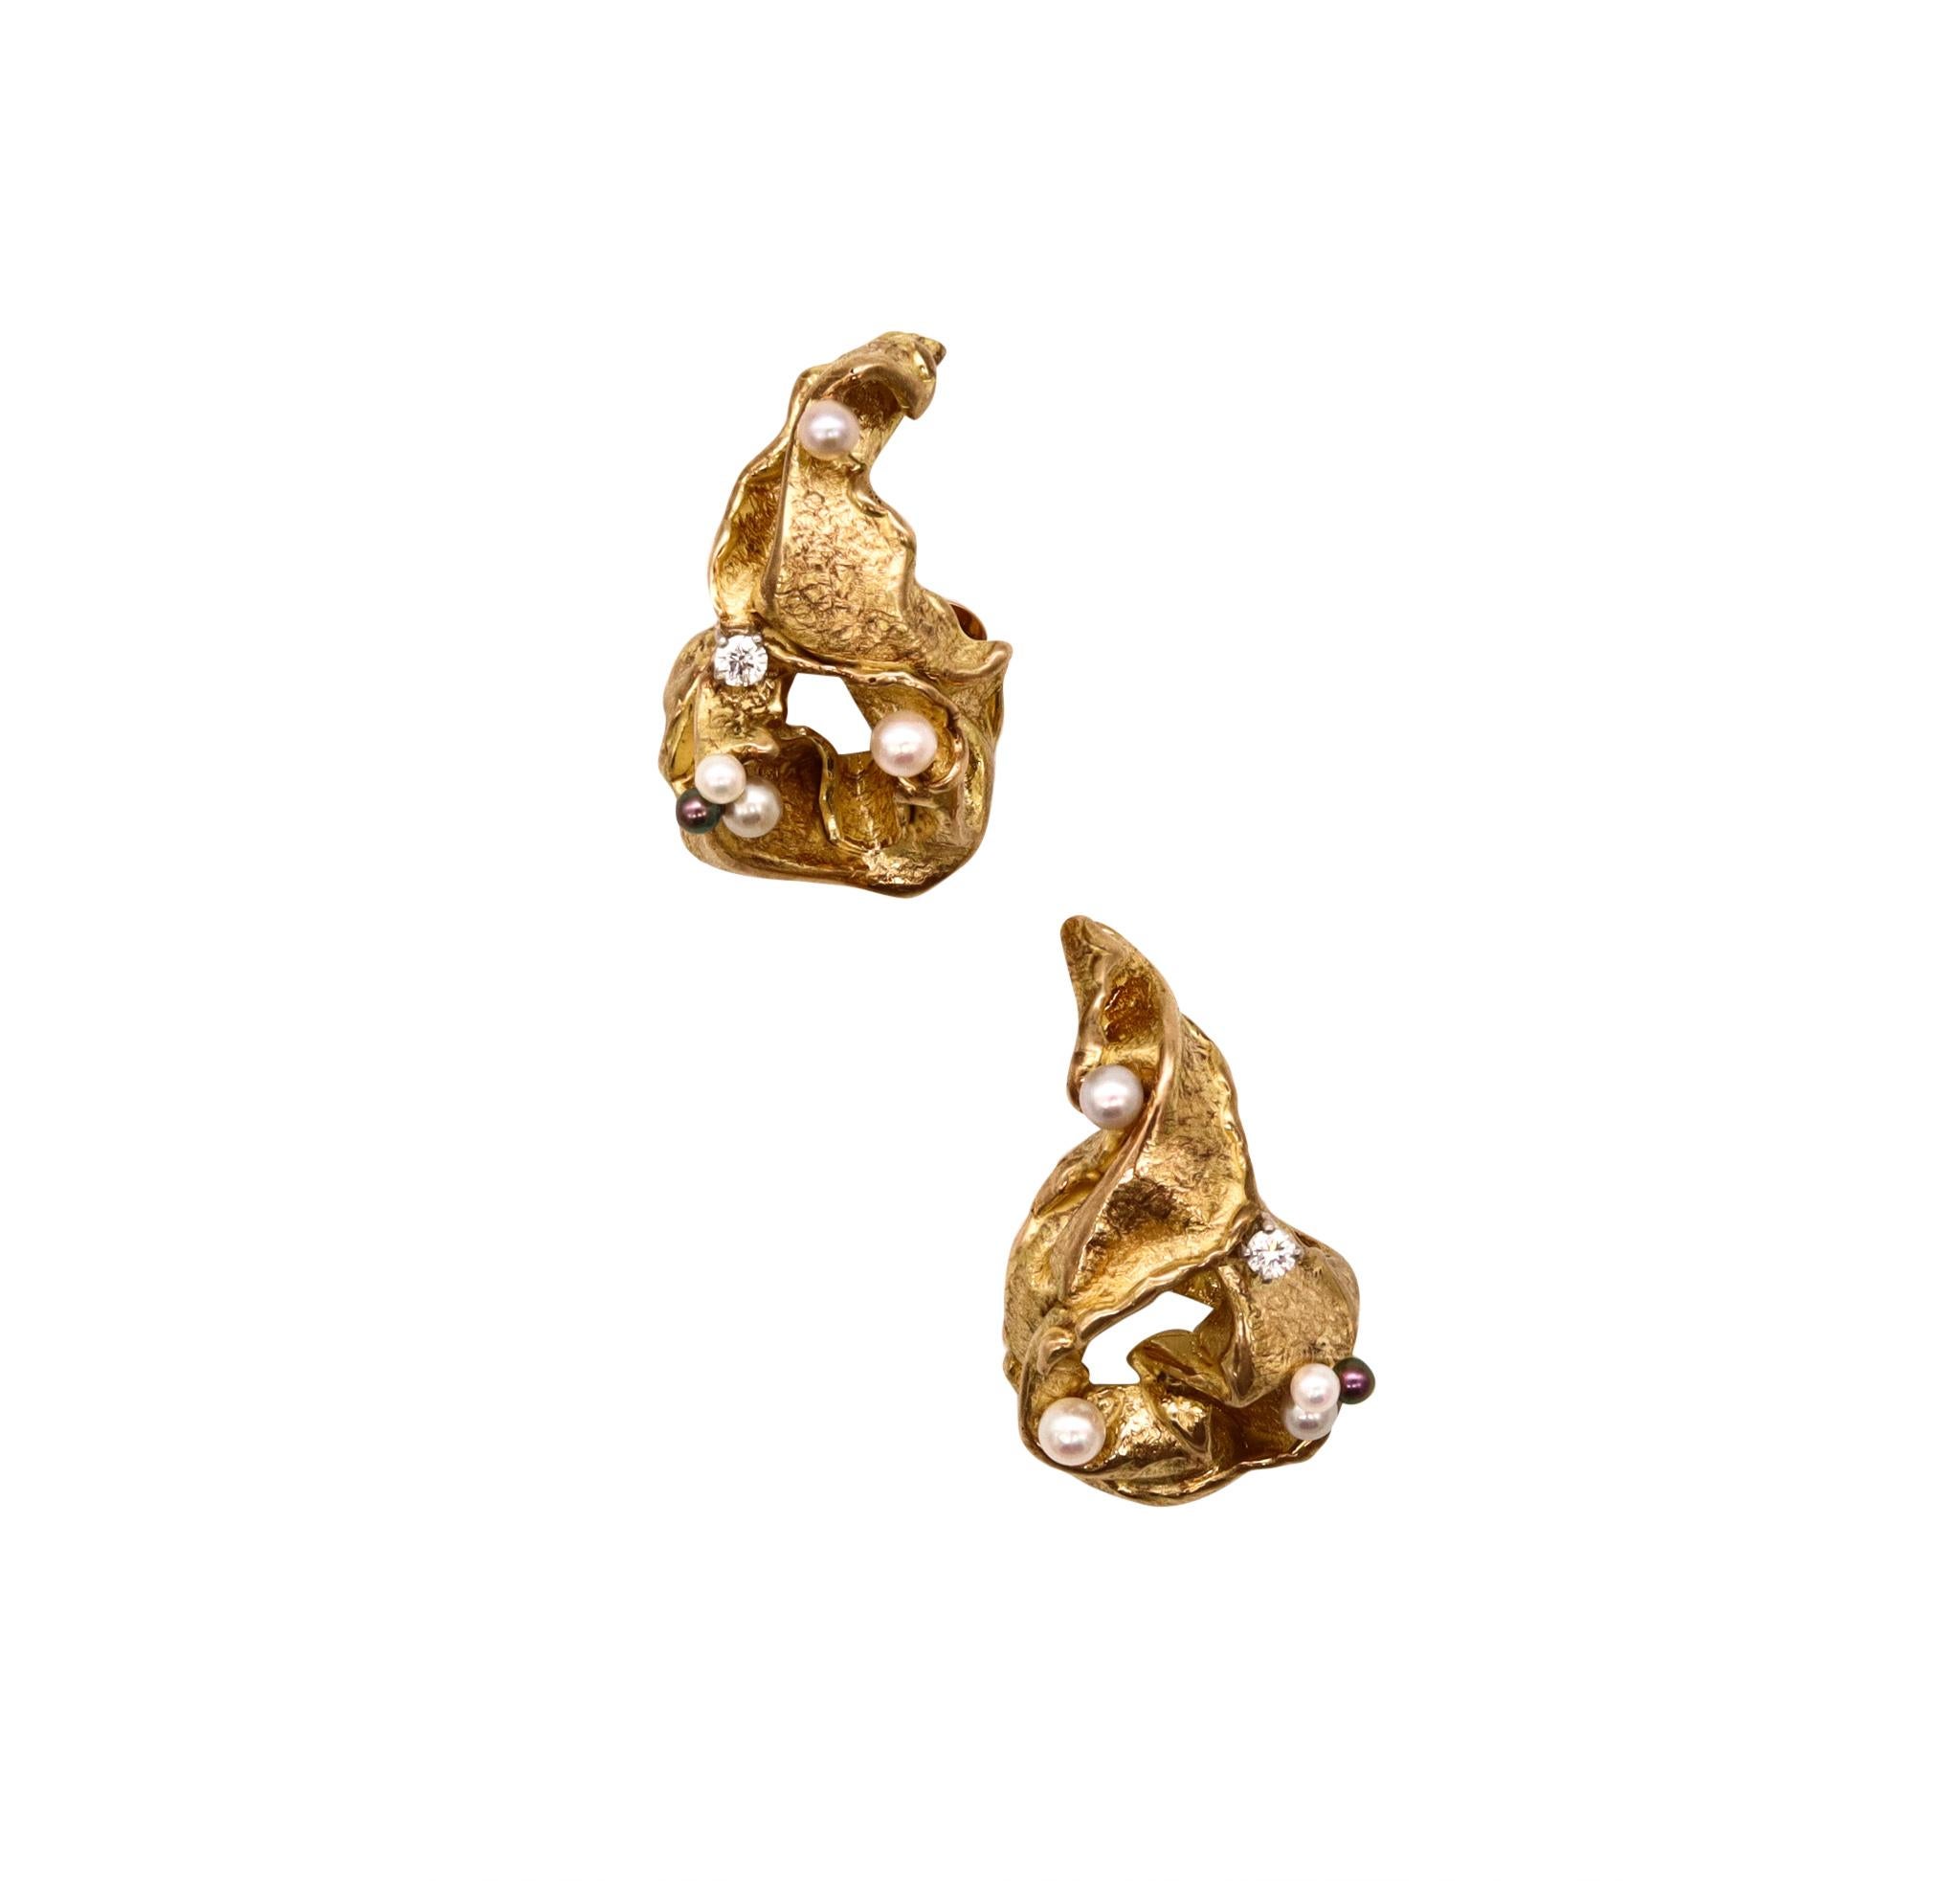 Gilbert Albert 1970 Swiss Modernist Clip Earrings In 18Kt Yellow Gold With Pearl 2